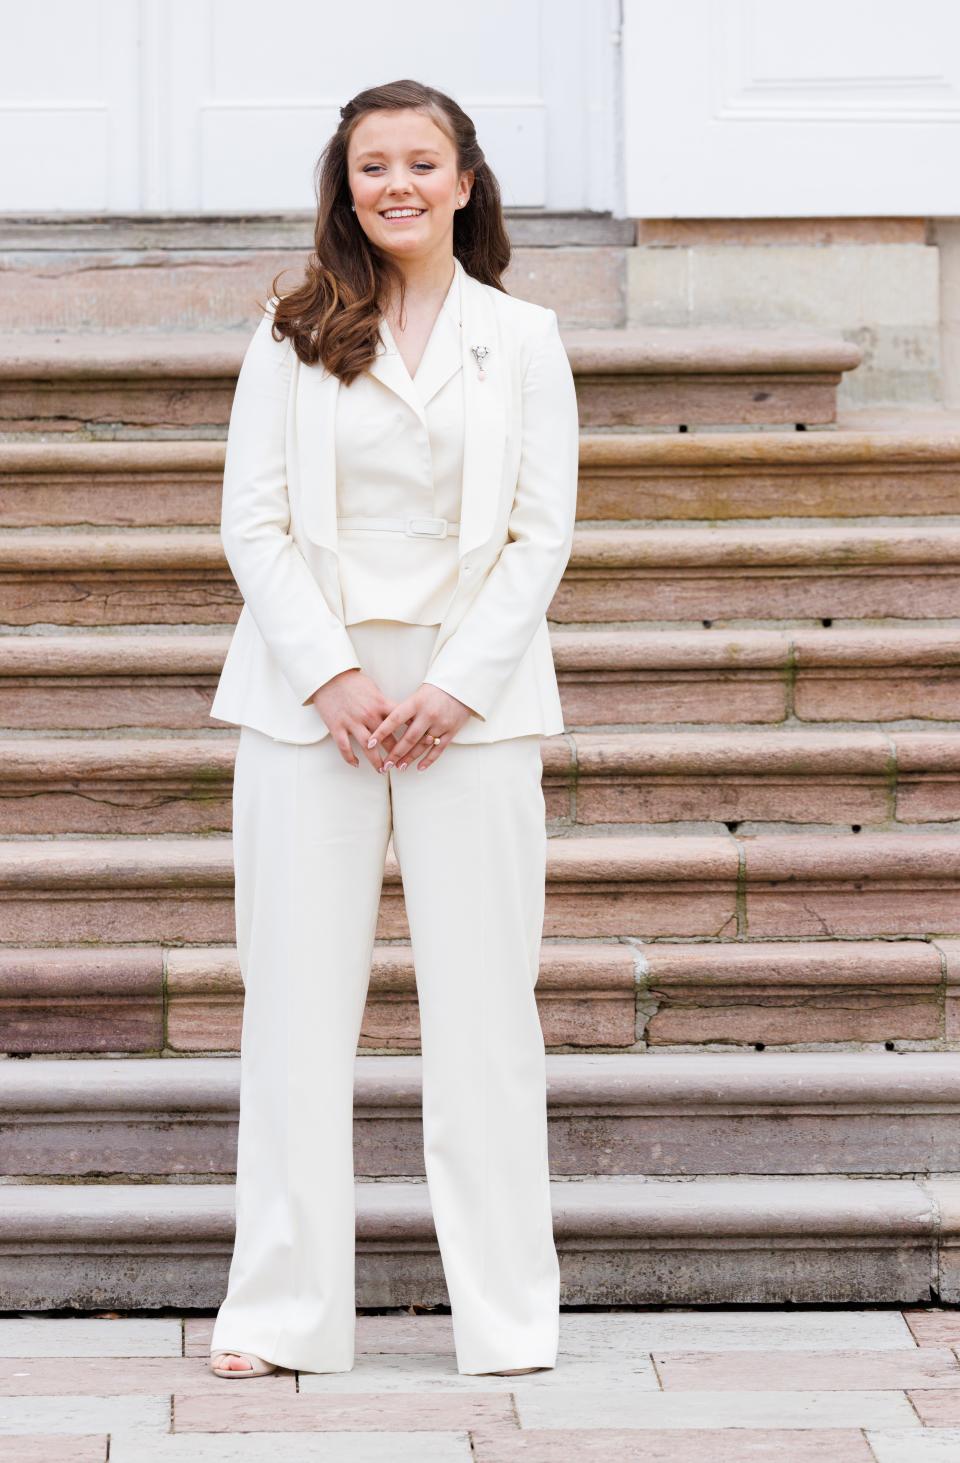 Princess Isabella of Denmark wearing a white pantsuit